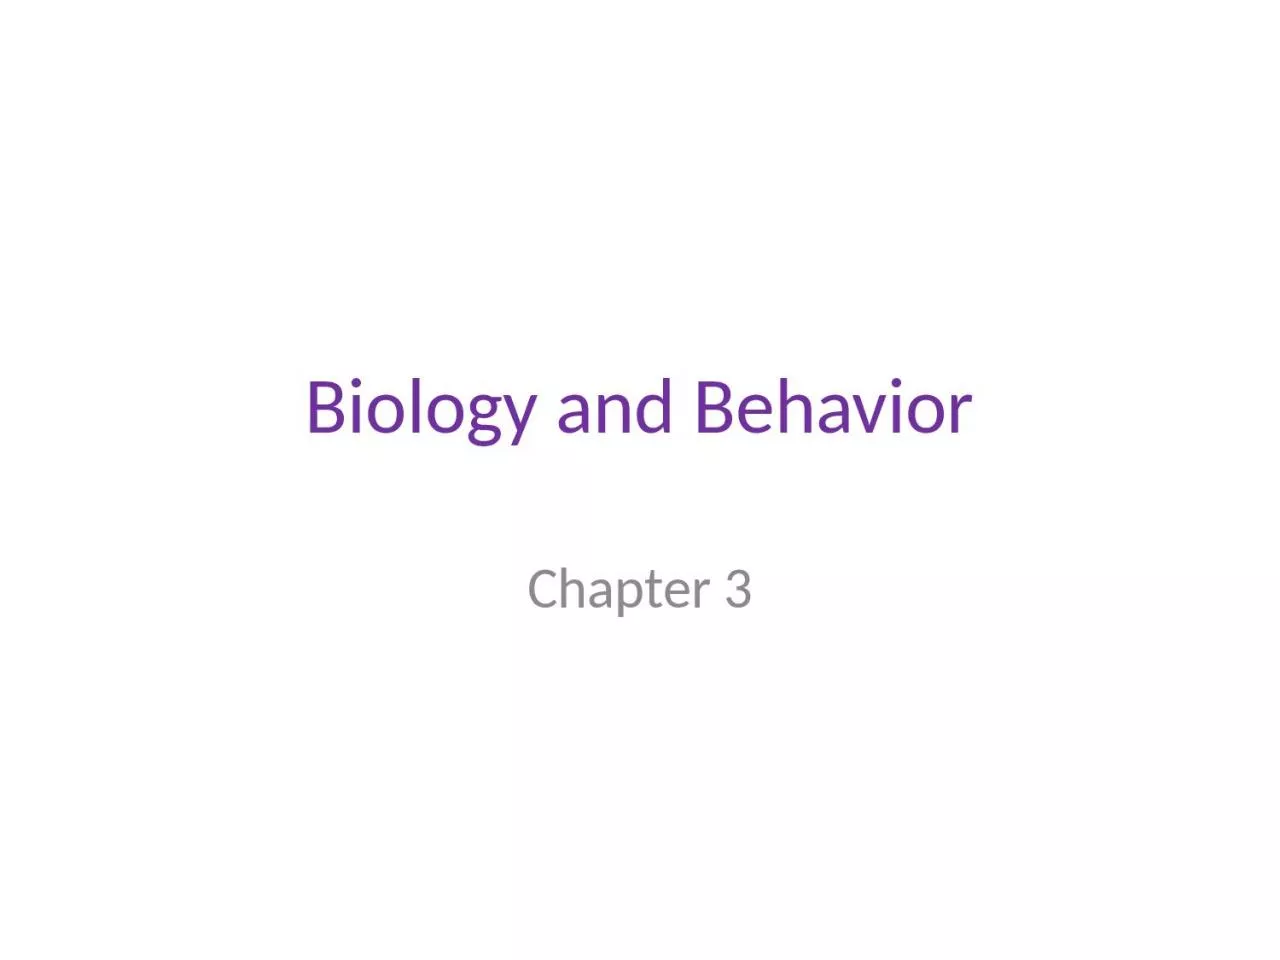 Biology and Behavior Chapter 3